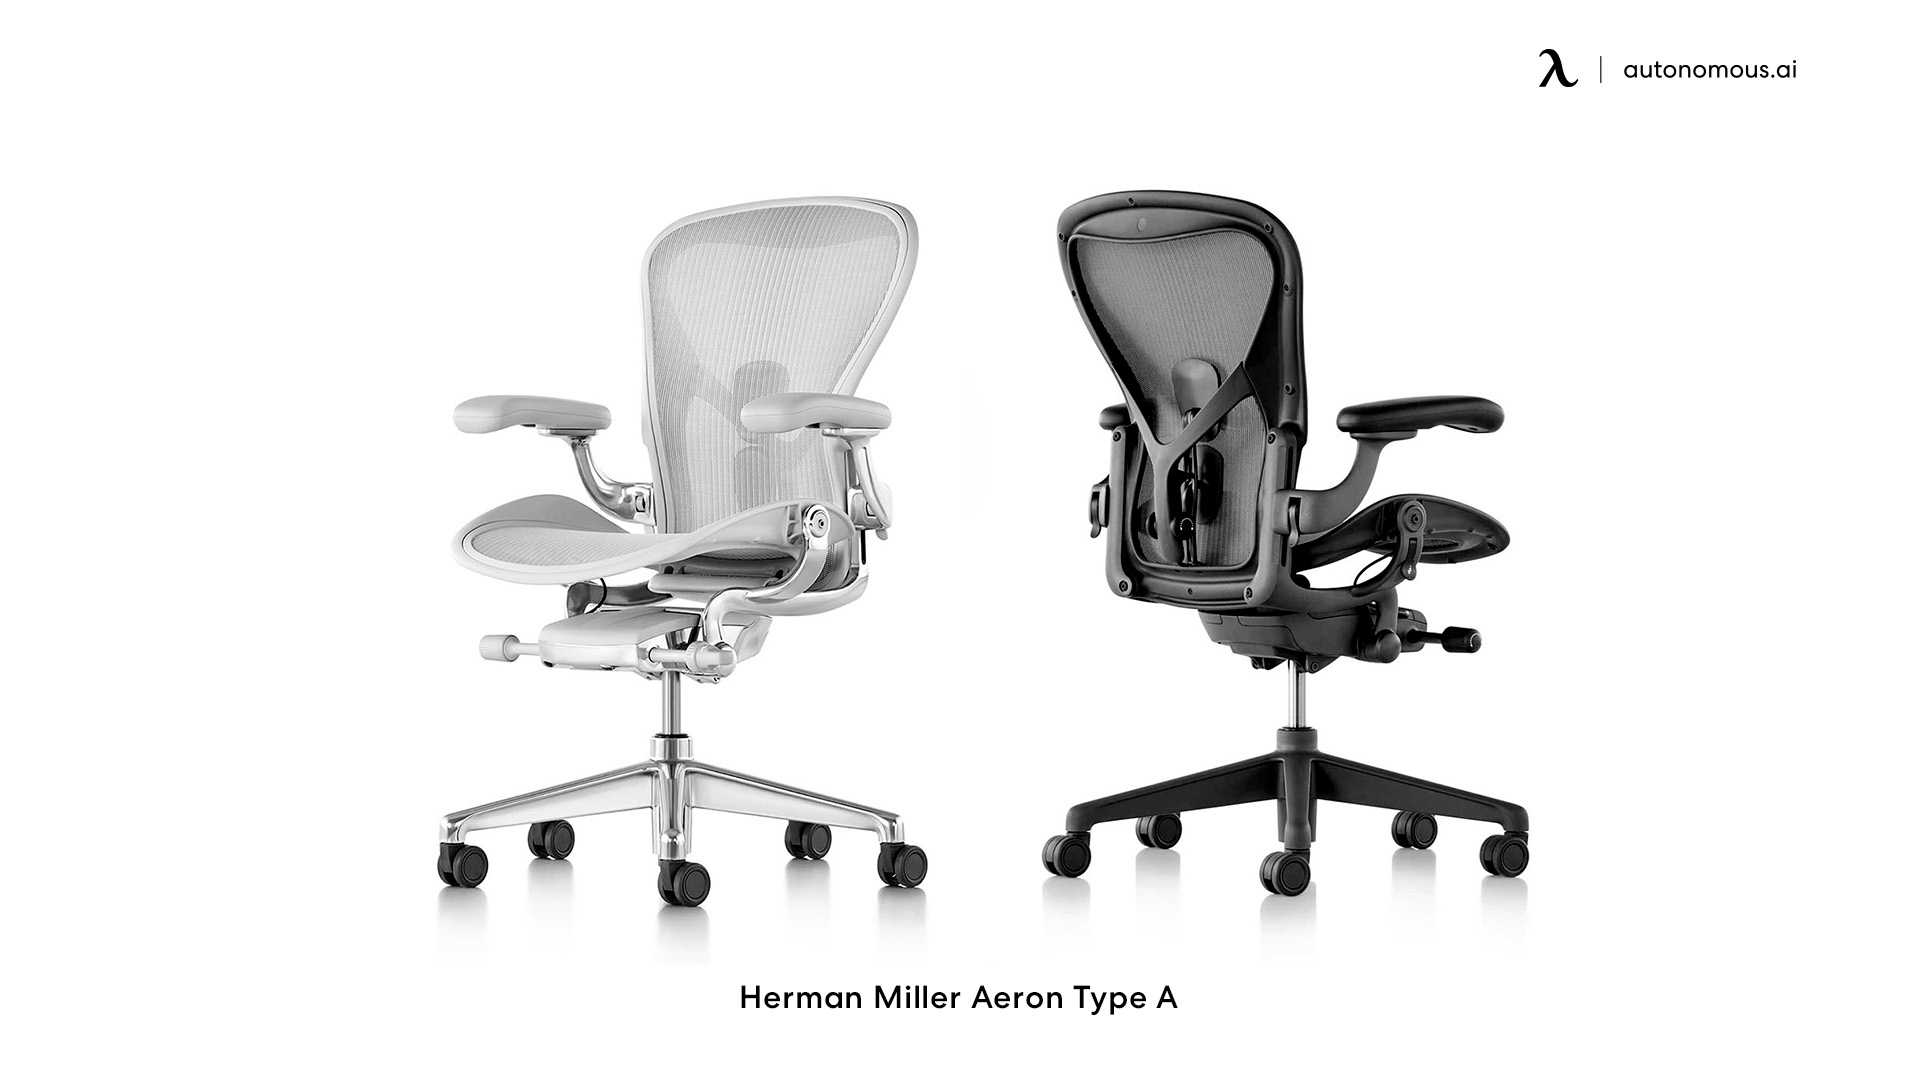 Herman Miller Aeron rolling office chair